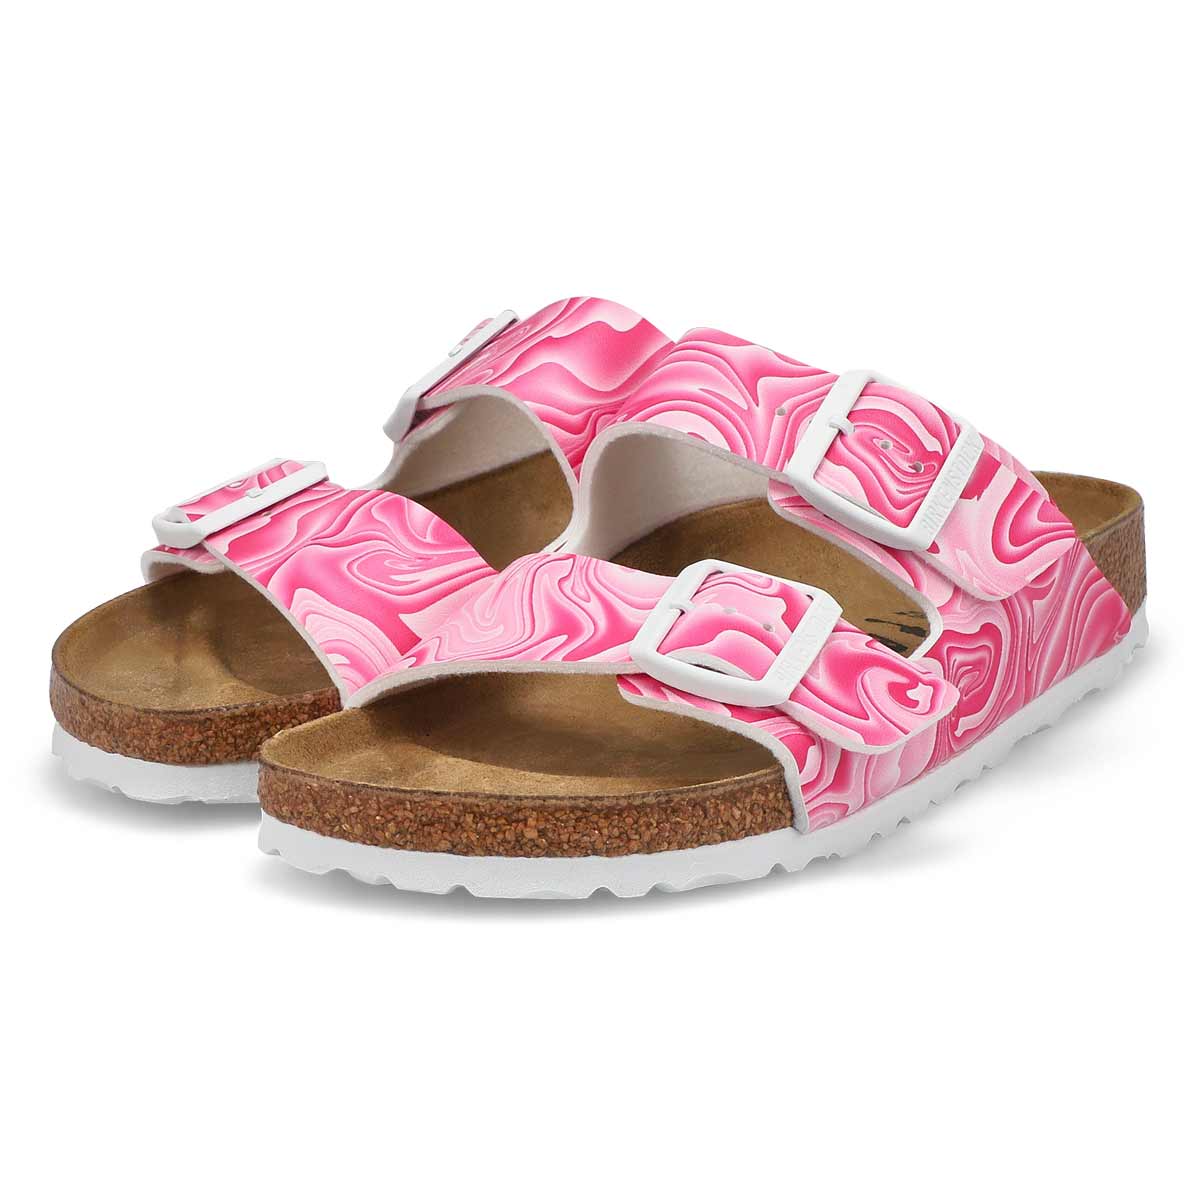 Women's Arizona Birko-Flor Narrow Sandal - Pink/White